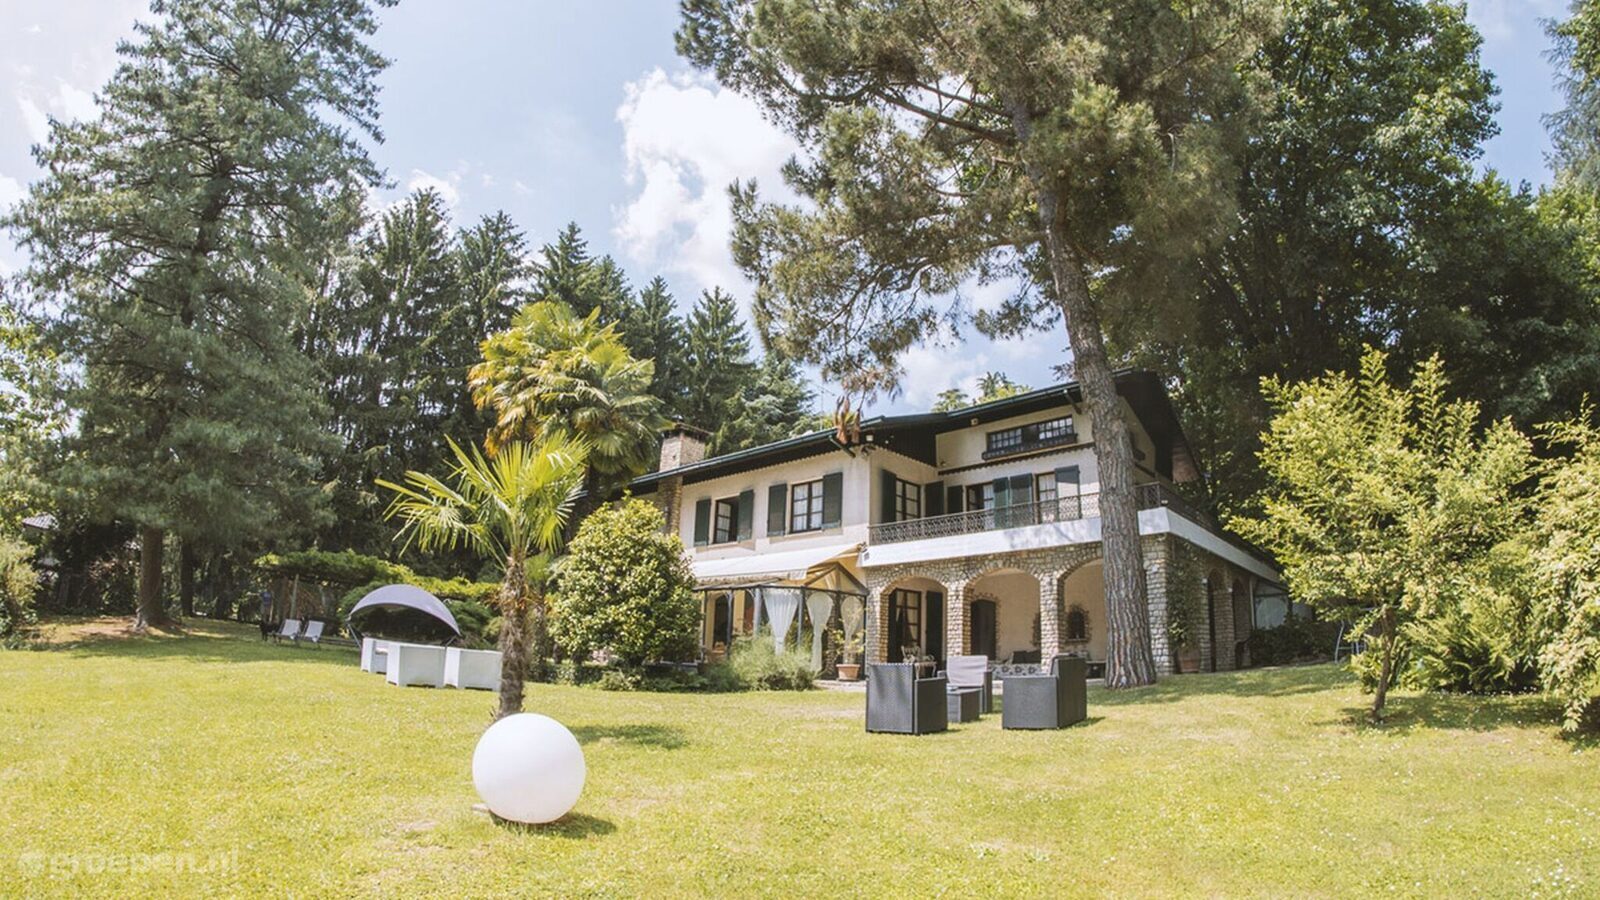 Holiday villa Sirtori